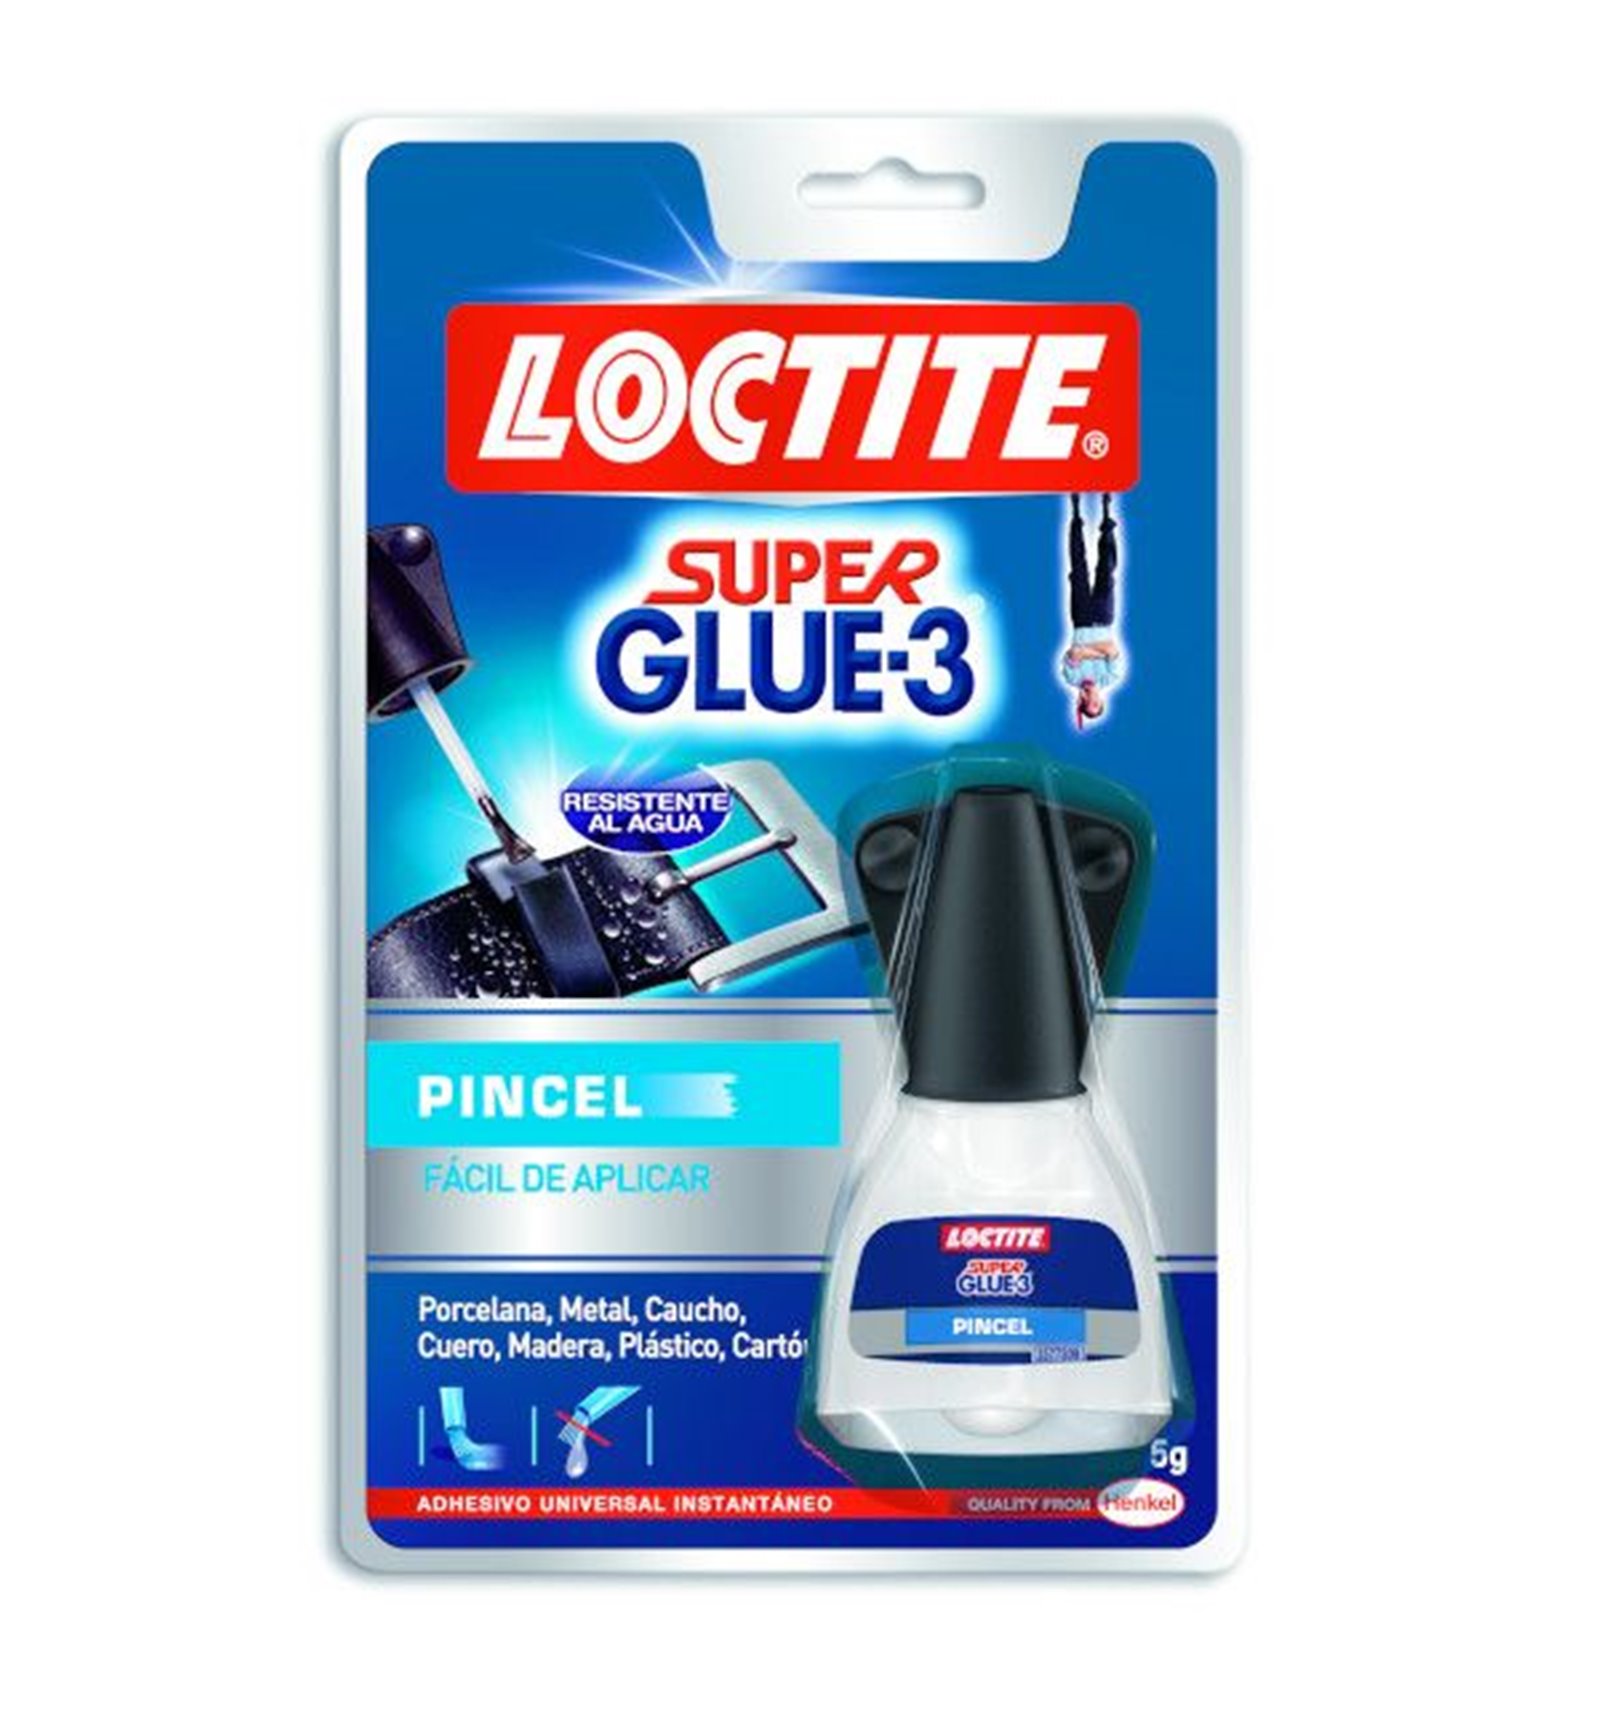 Super Glue 3 - Profesional - Loctite super glue-3 